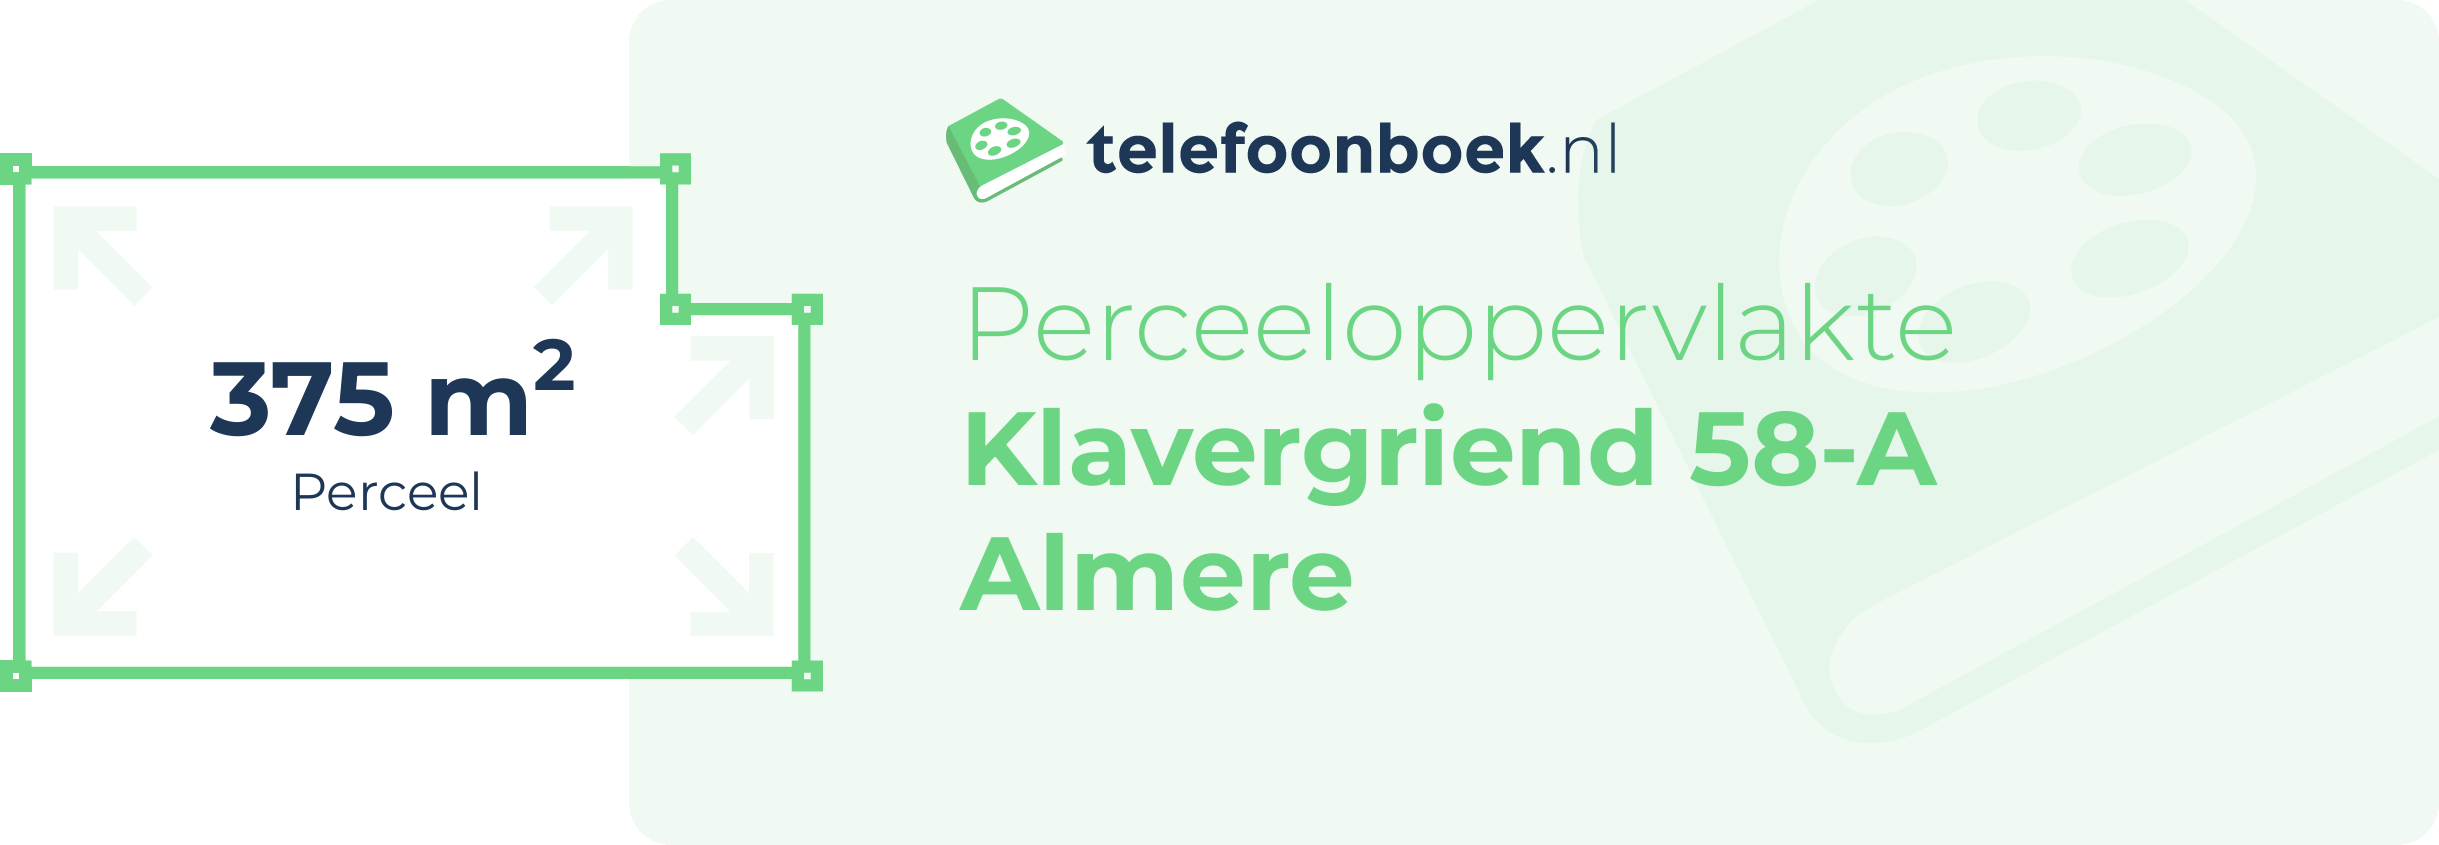 Perceeloppervlakte Klavergriend 58-A Almere